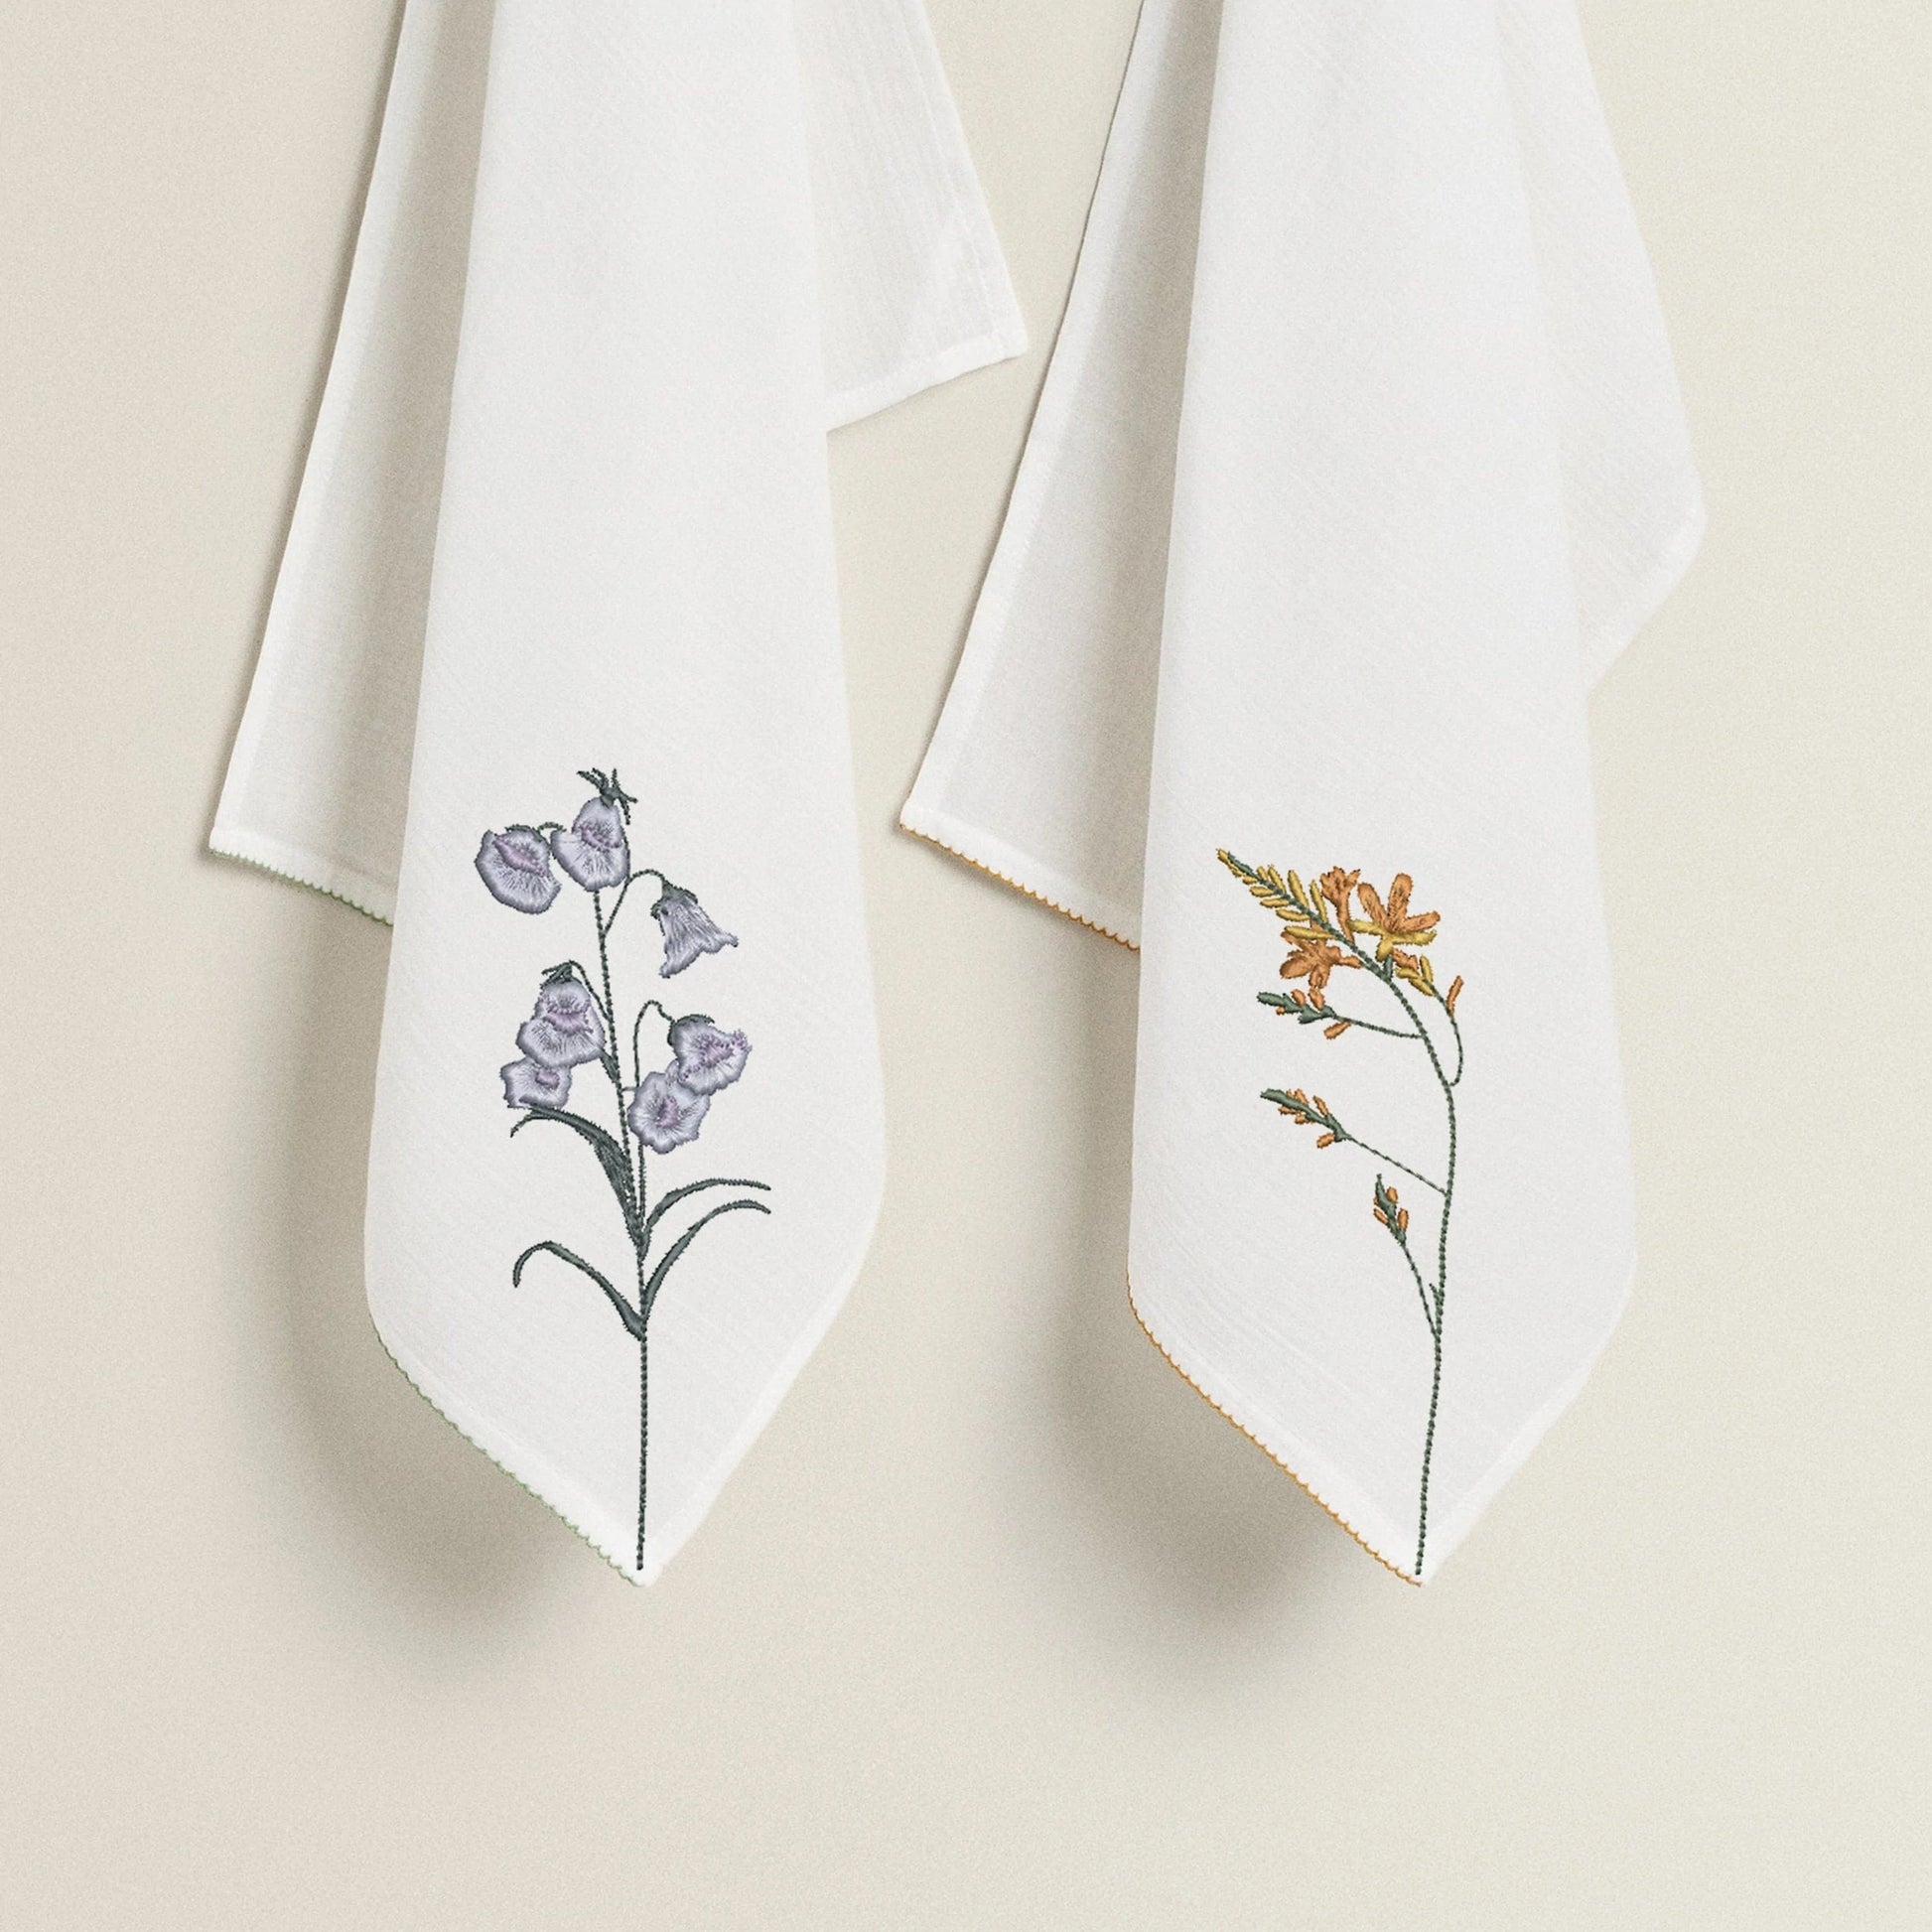 Wildflower machine embroidery design towels